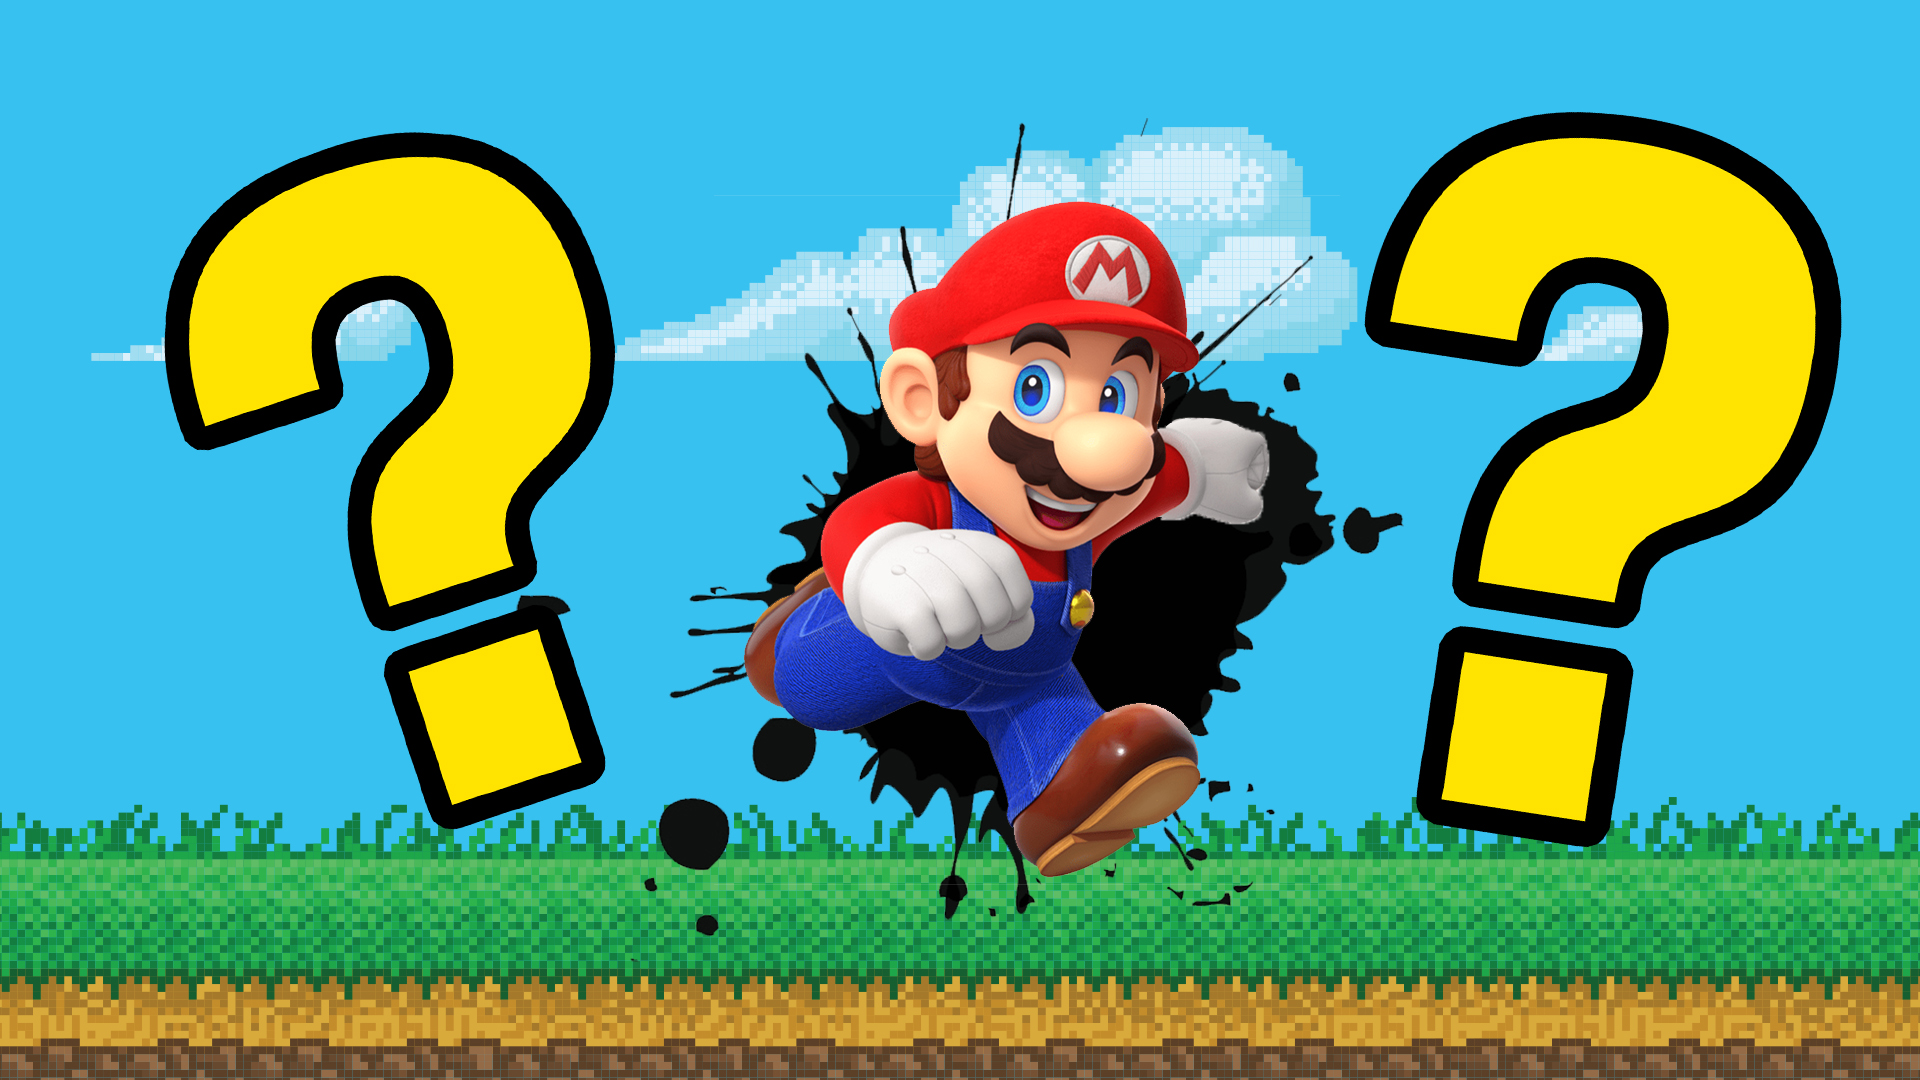 Mario runs on a pixelated background